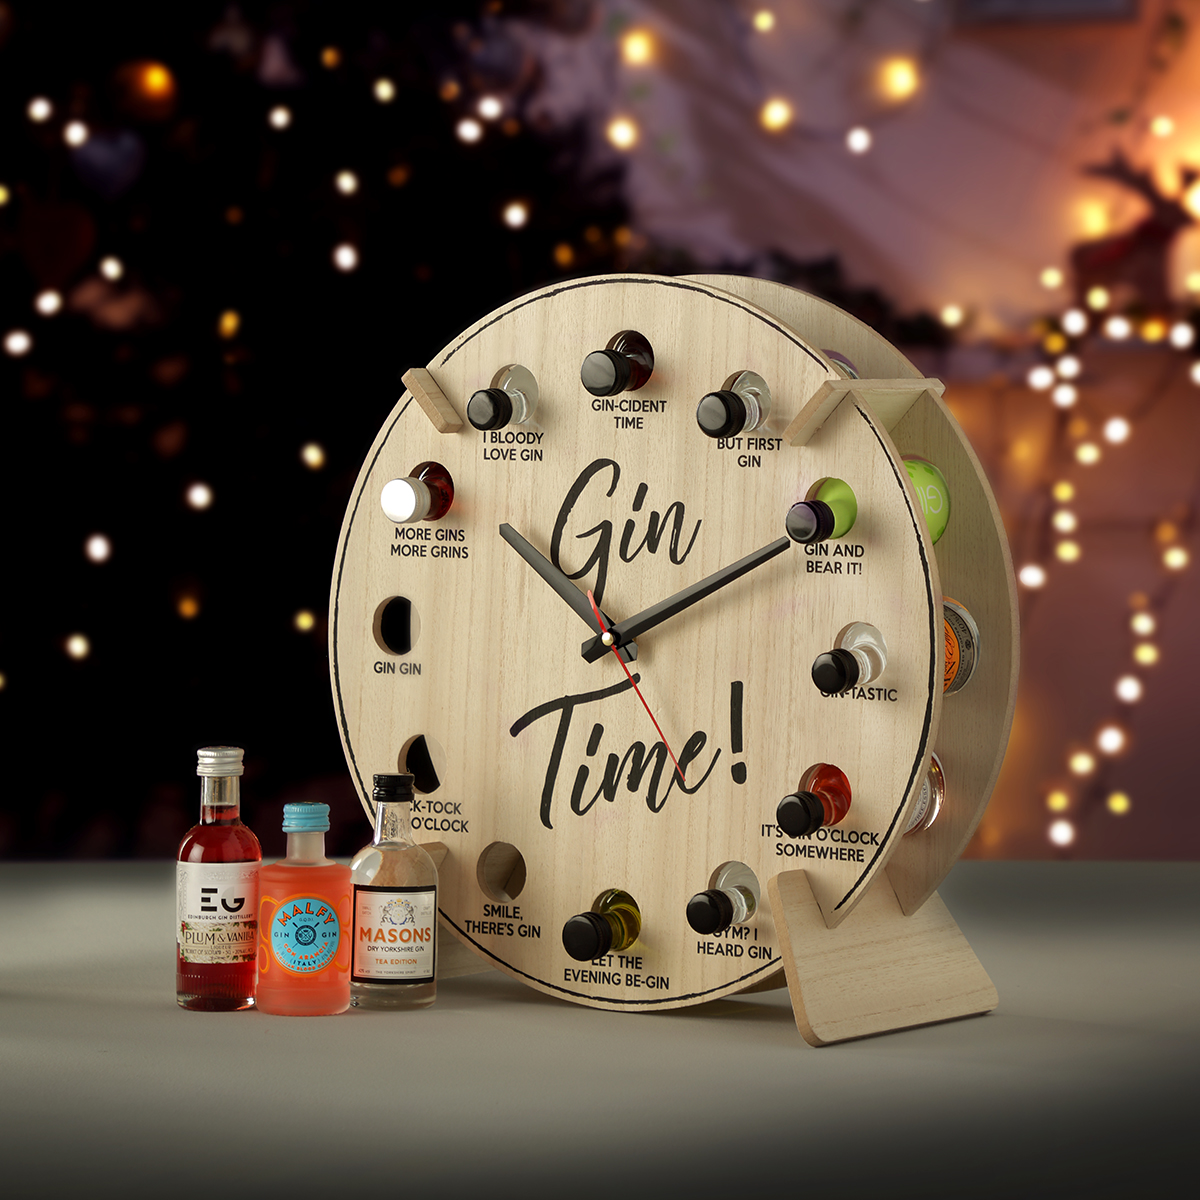 Gin Time